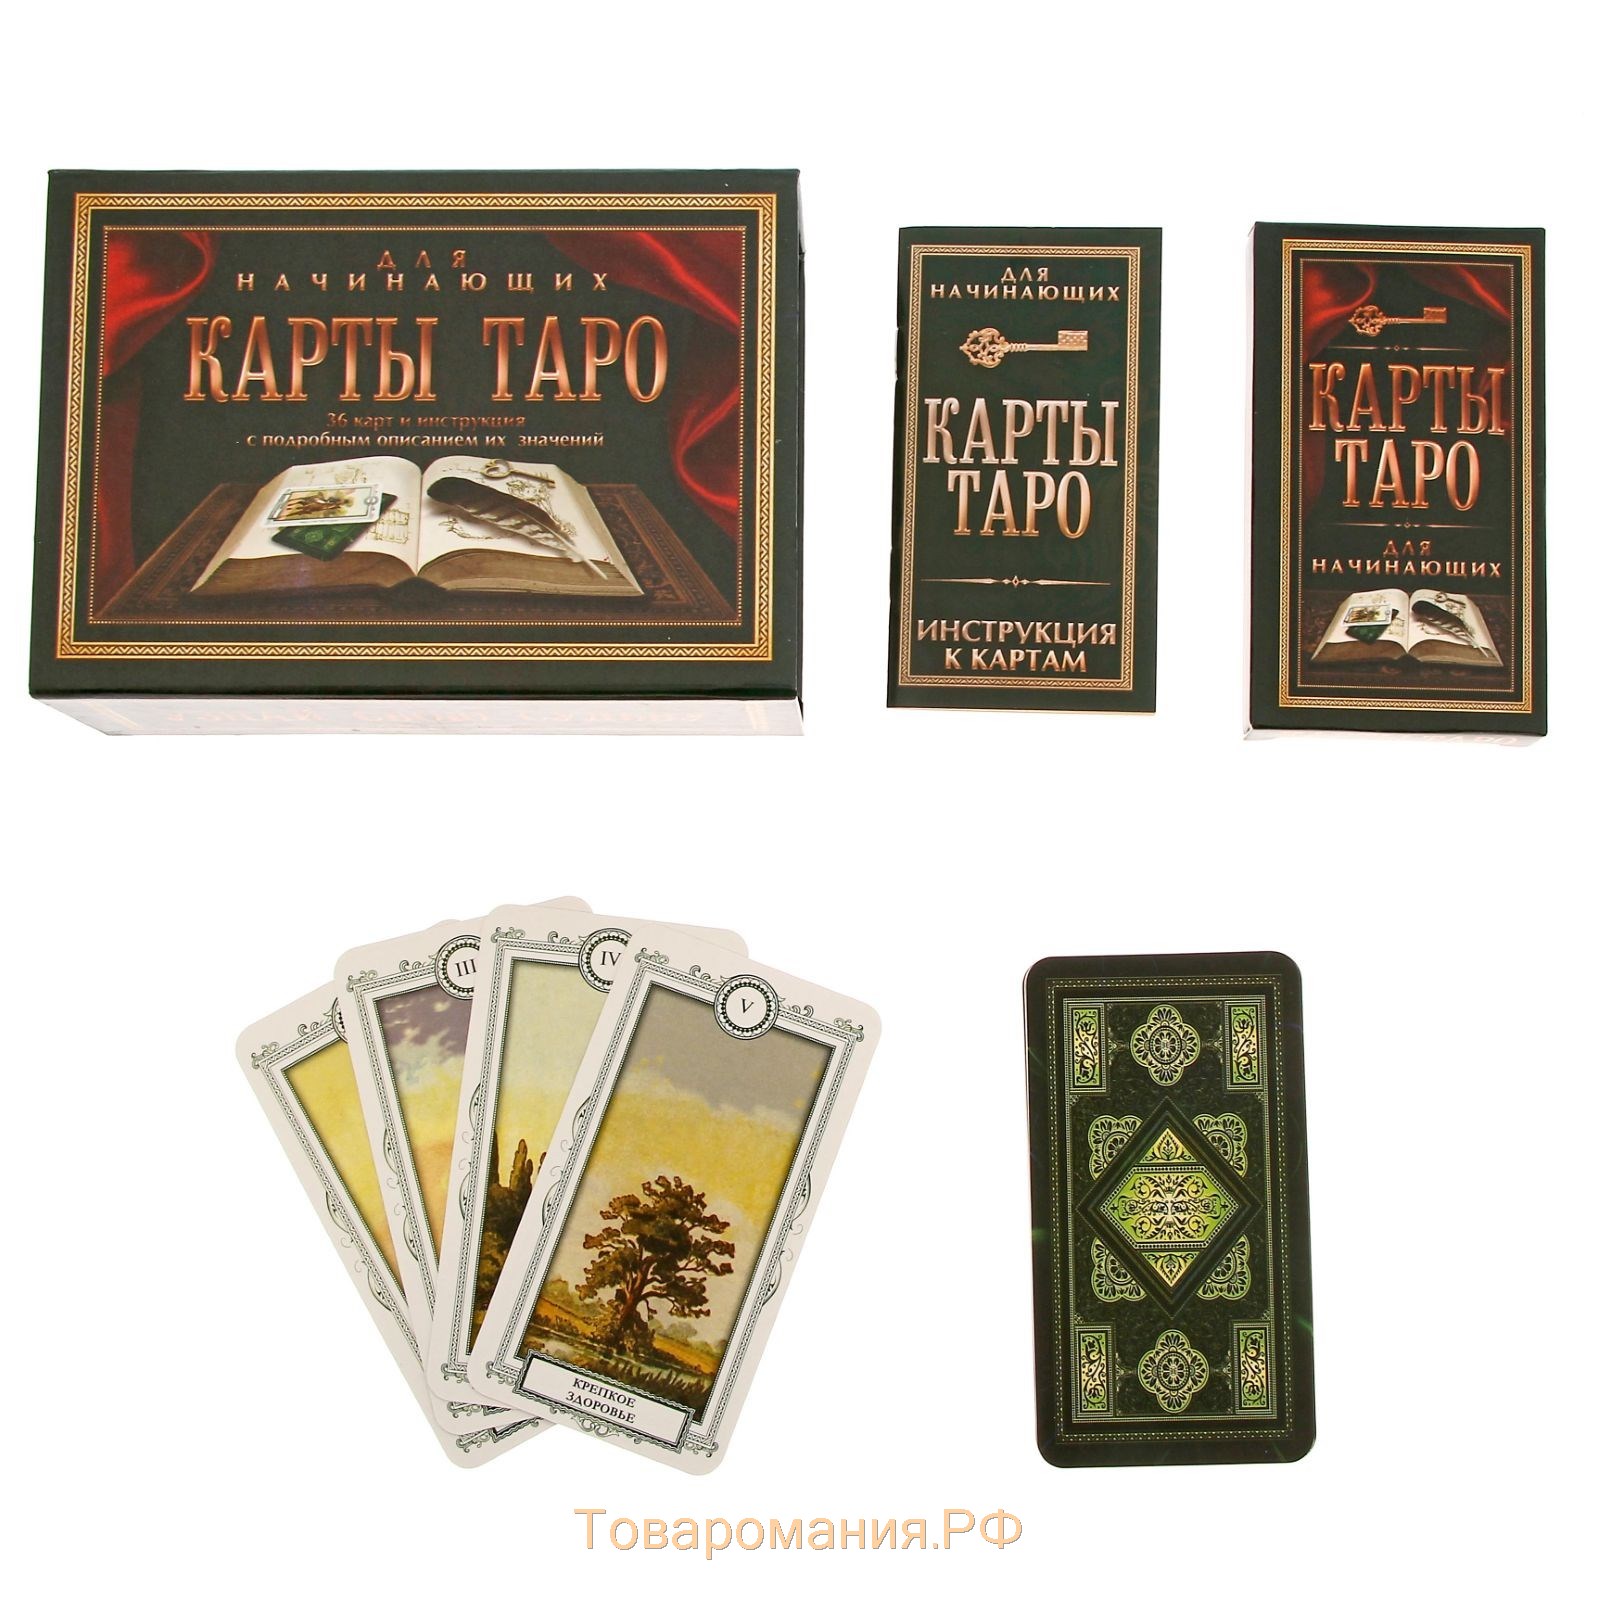 Книги карты таро для начинающих. Карты Таро "для начинающих". Карты Таро упаковка. Карты Таро в подарочной упаковке. Карты Таро для новичков.